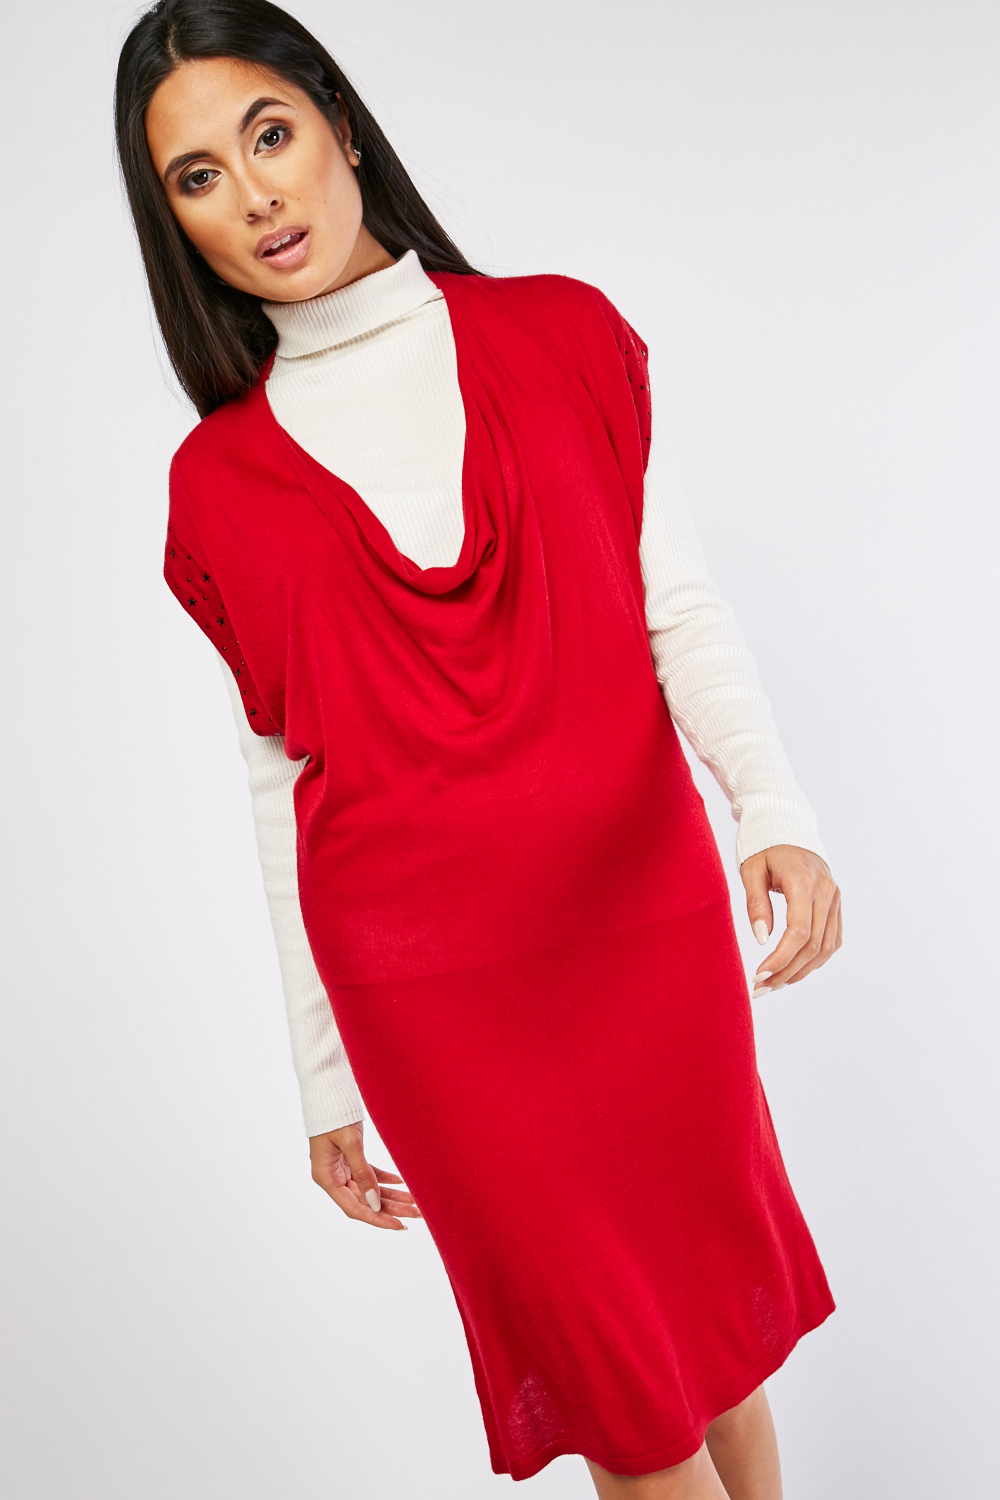 Cowl Neck Studded Knit Dress - Just $3